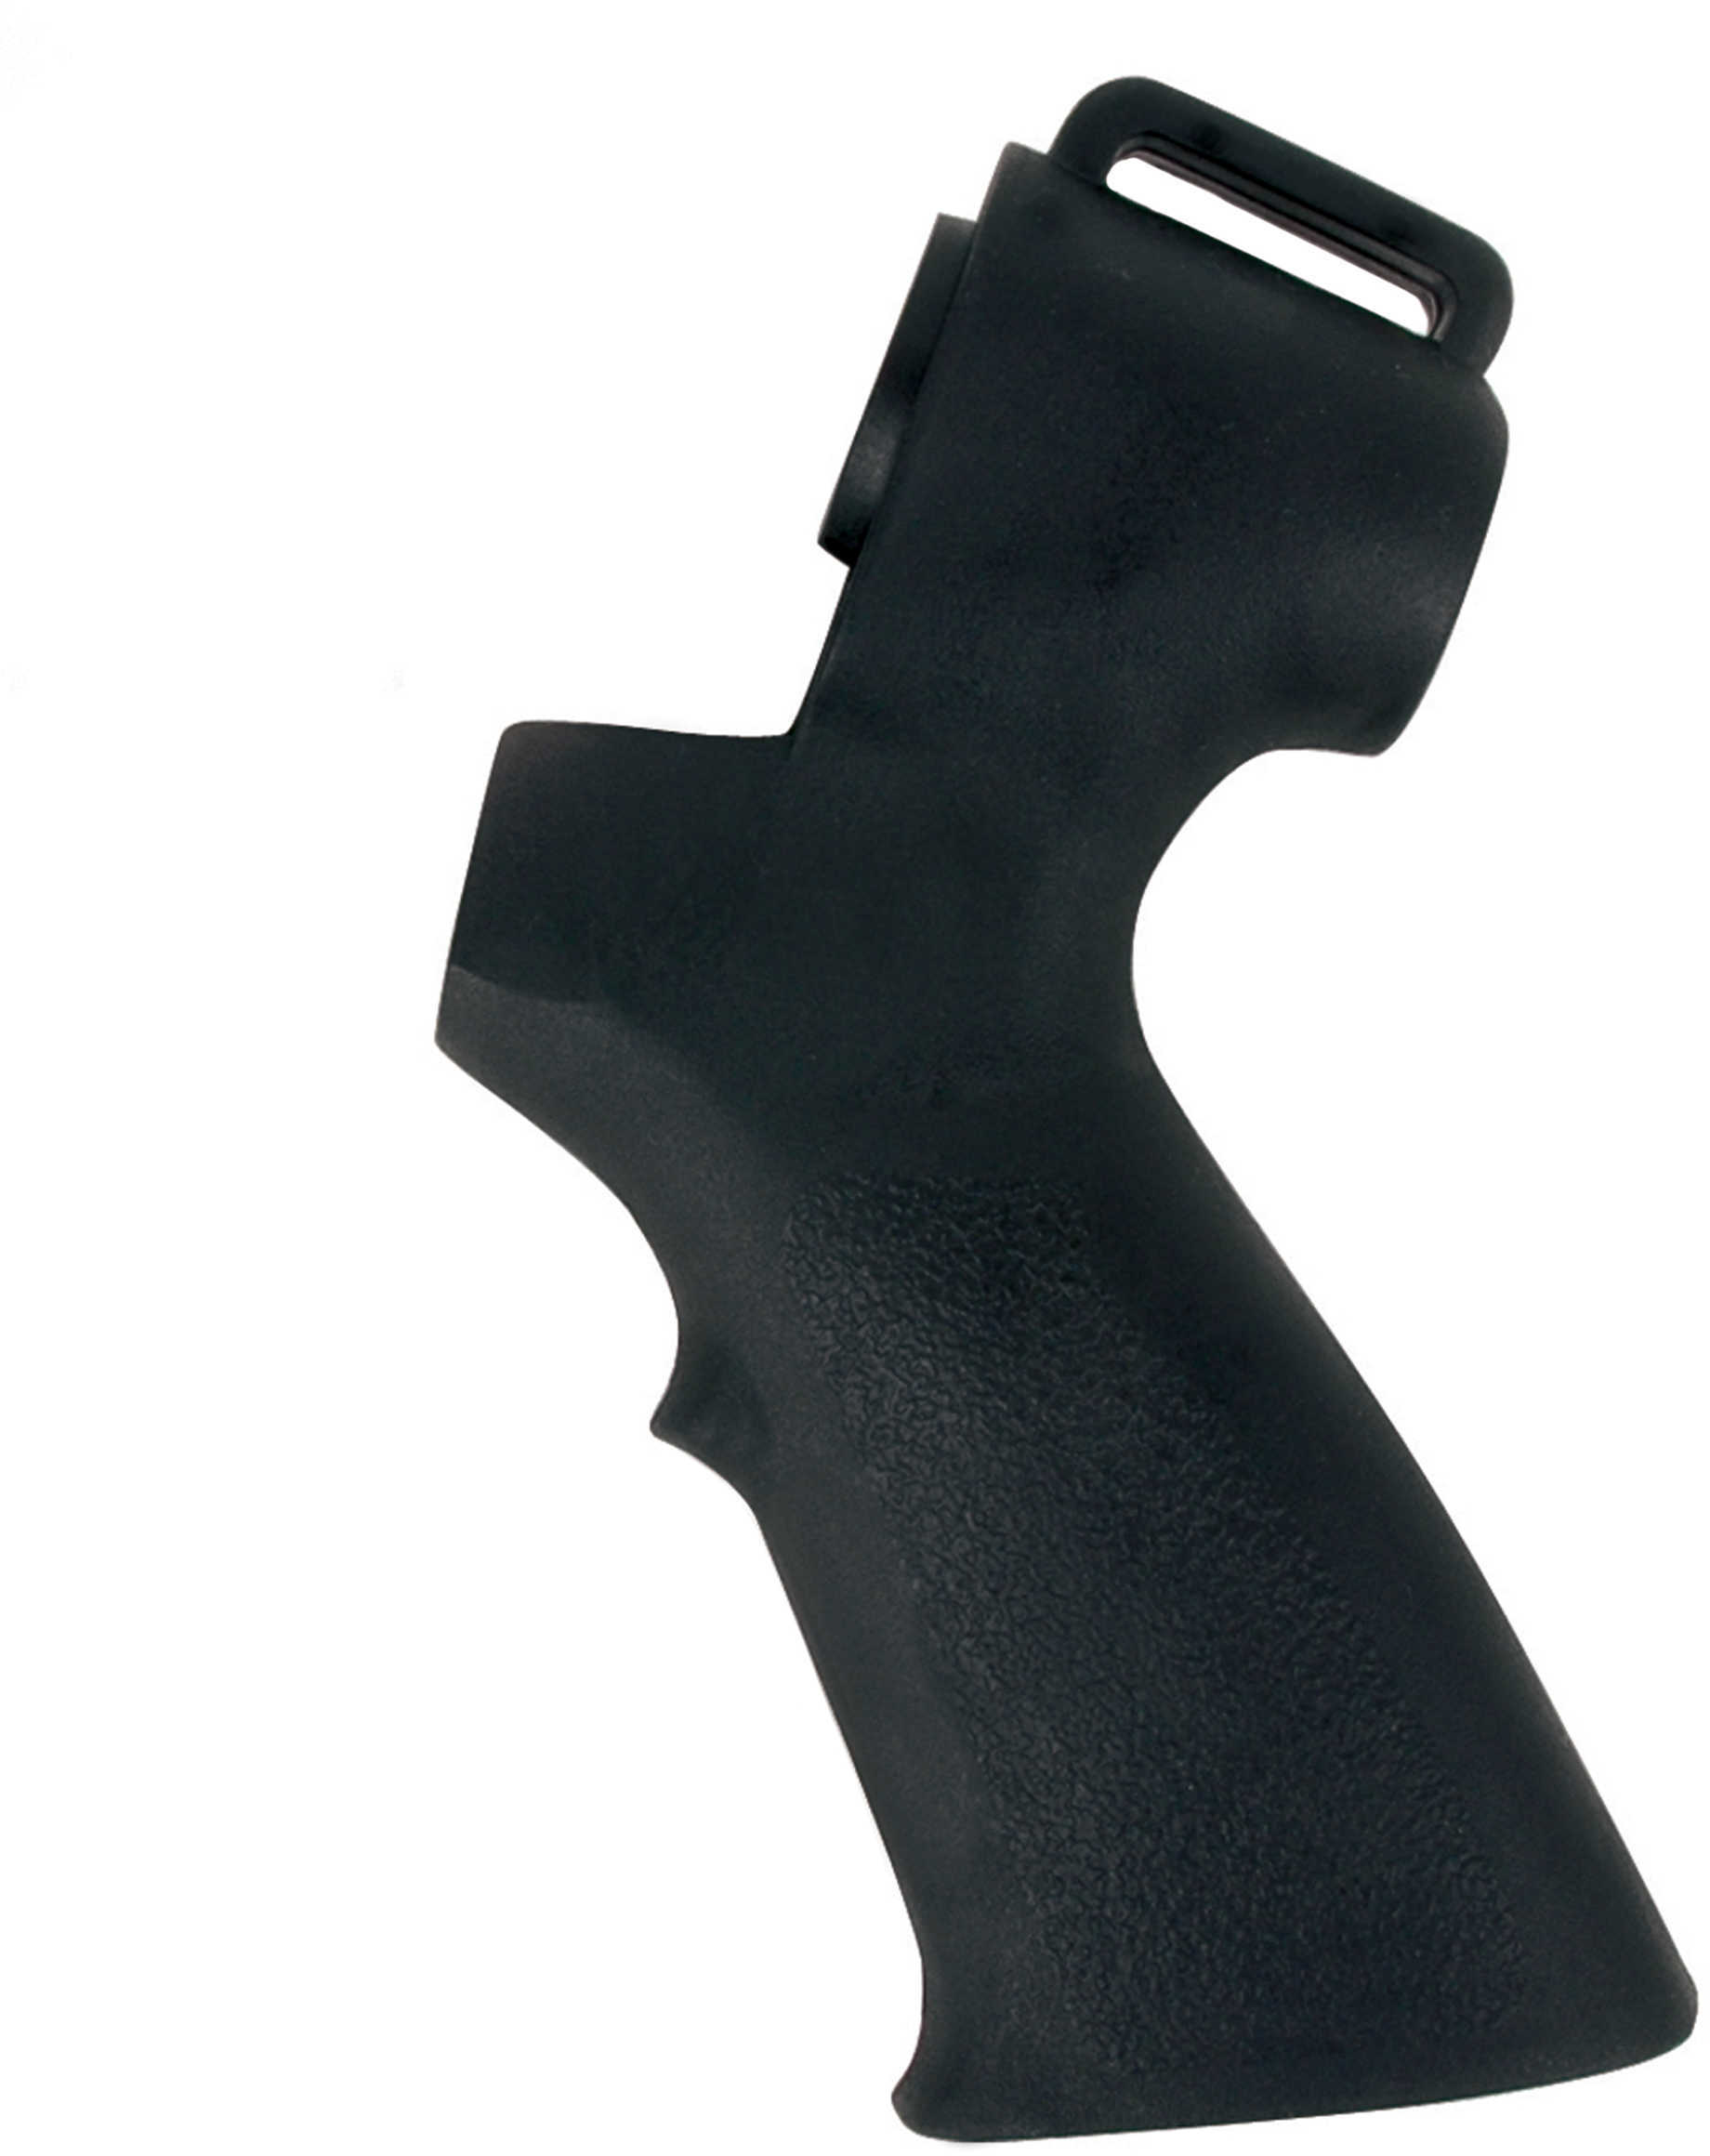 Adv. Tech. Pistol Grip Kit For Most PUMPS Black Syn